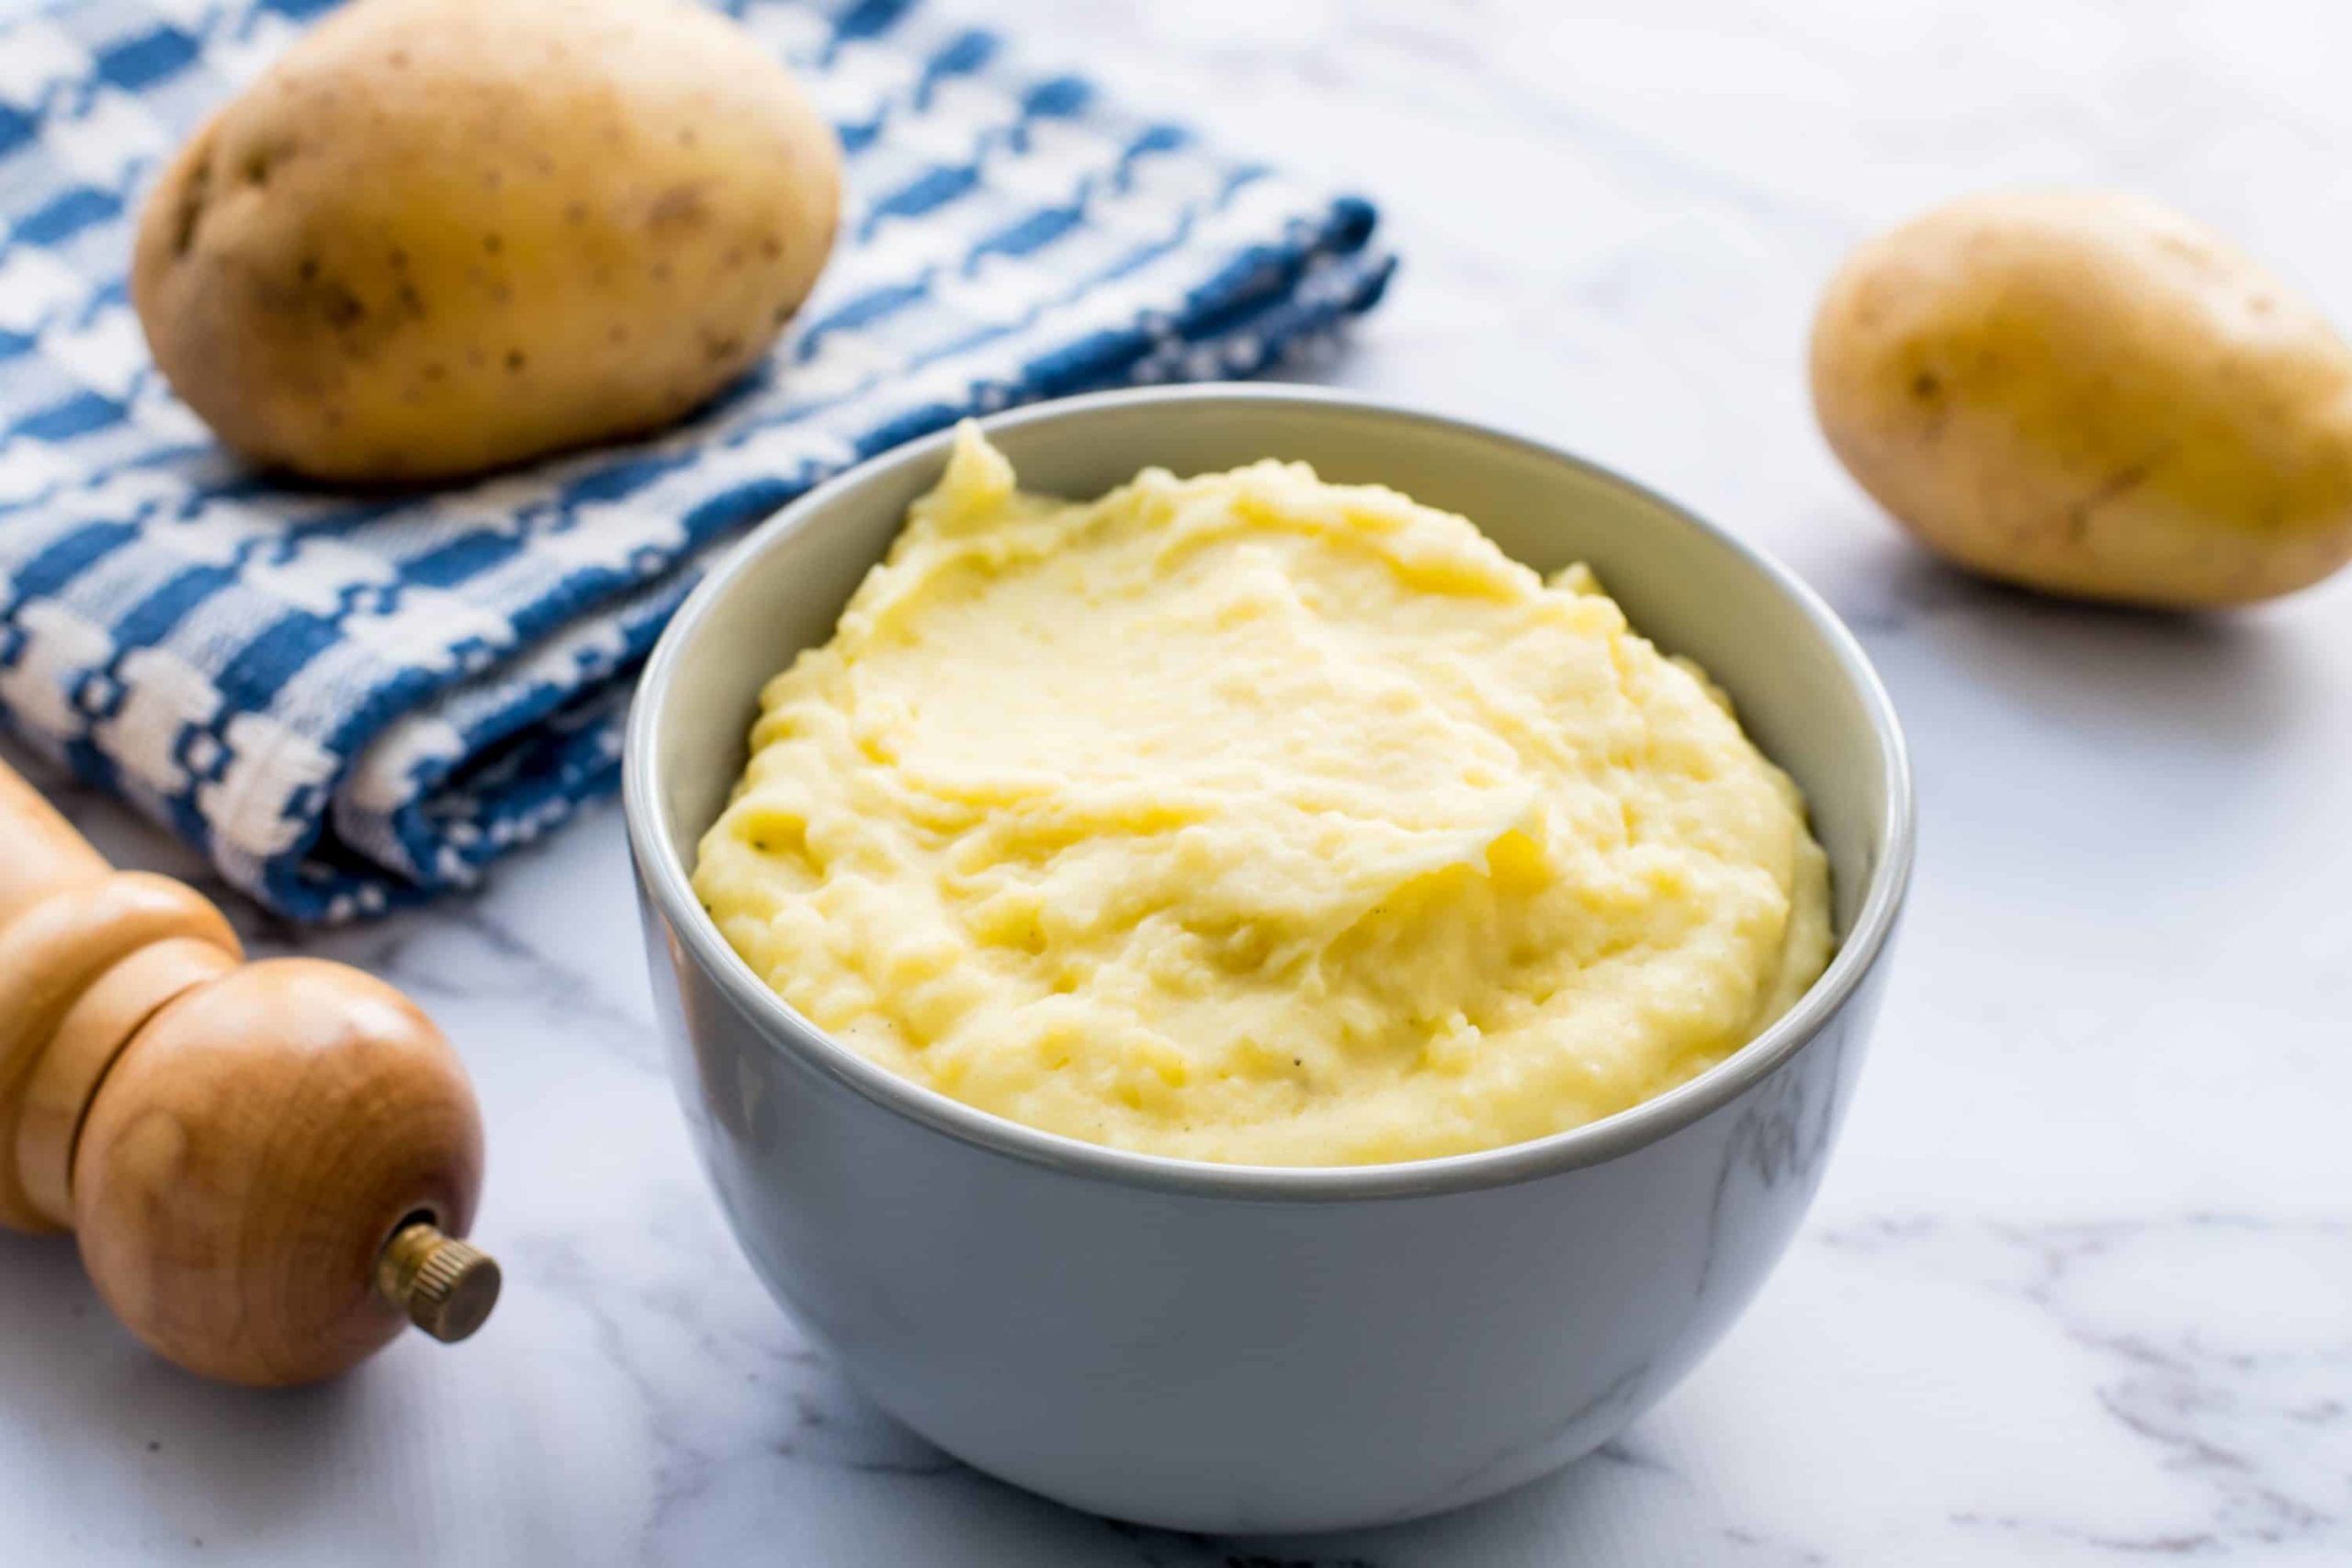 How to Make Mashed Potatoes 